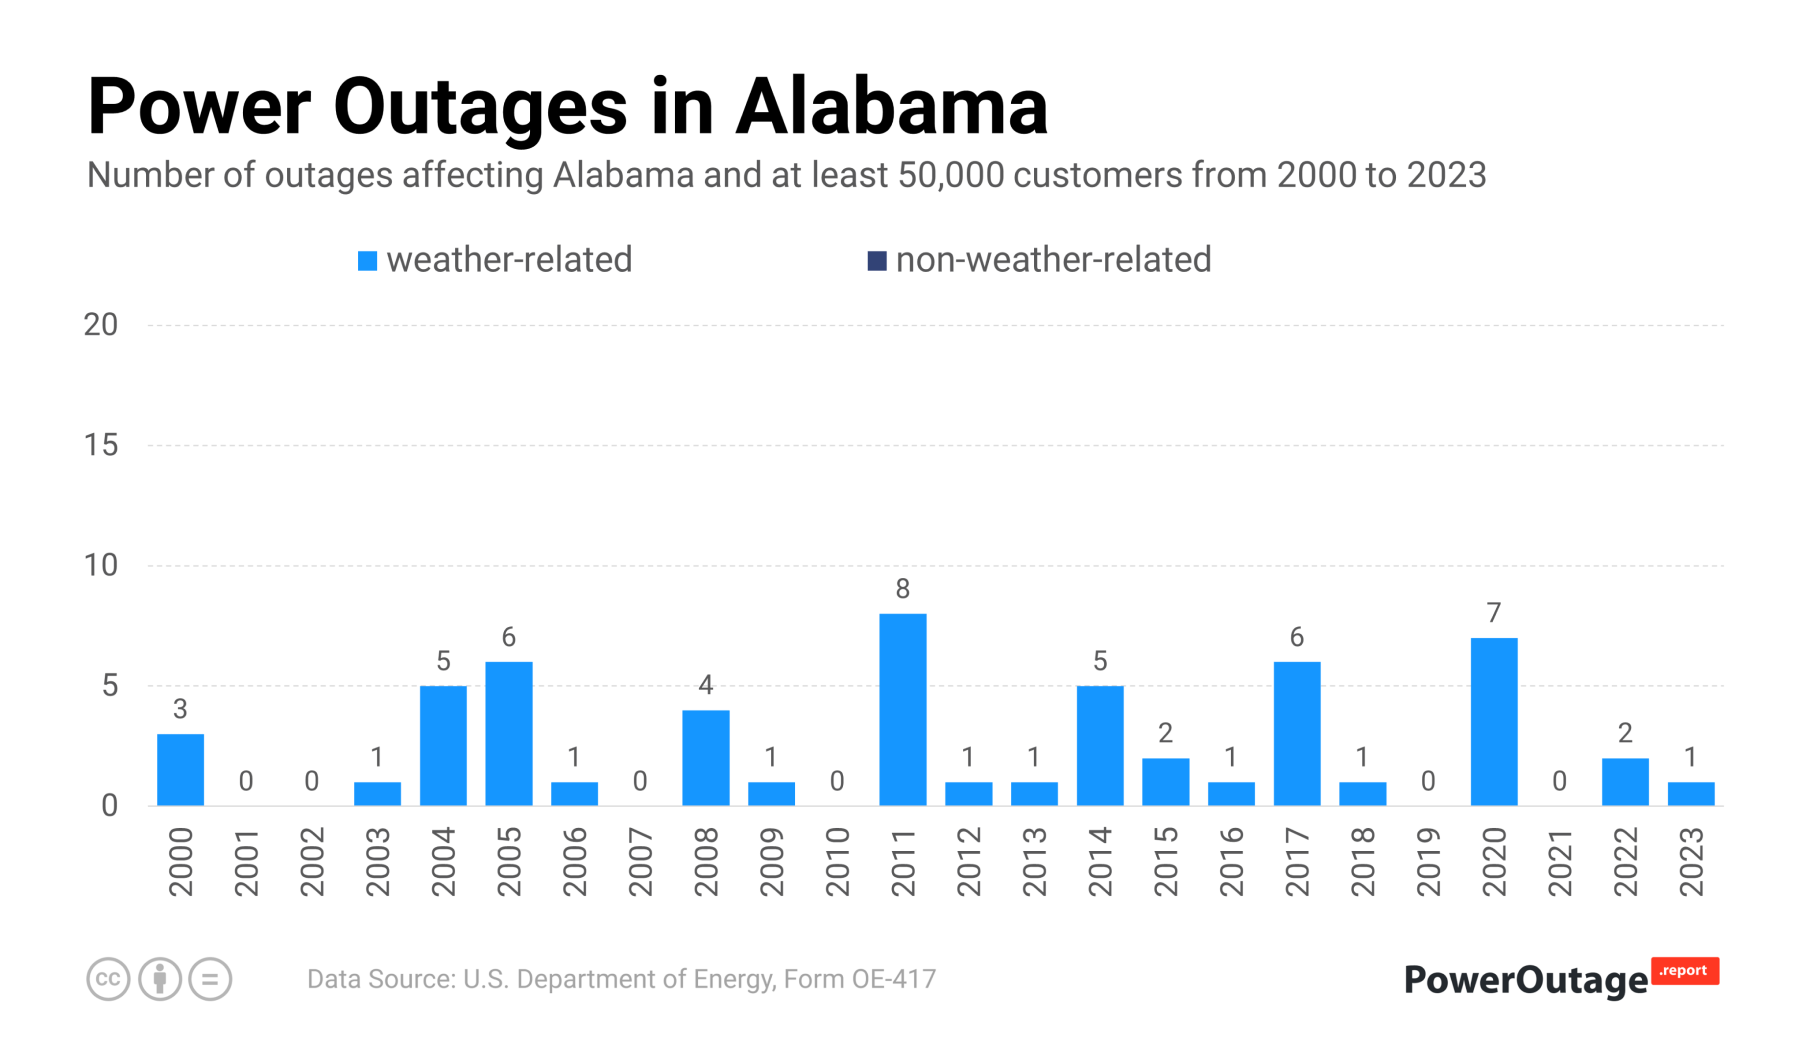 Alabama Power Outage Statistics (2000 - 2021)